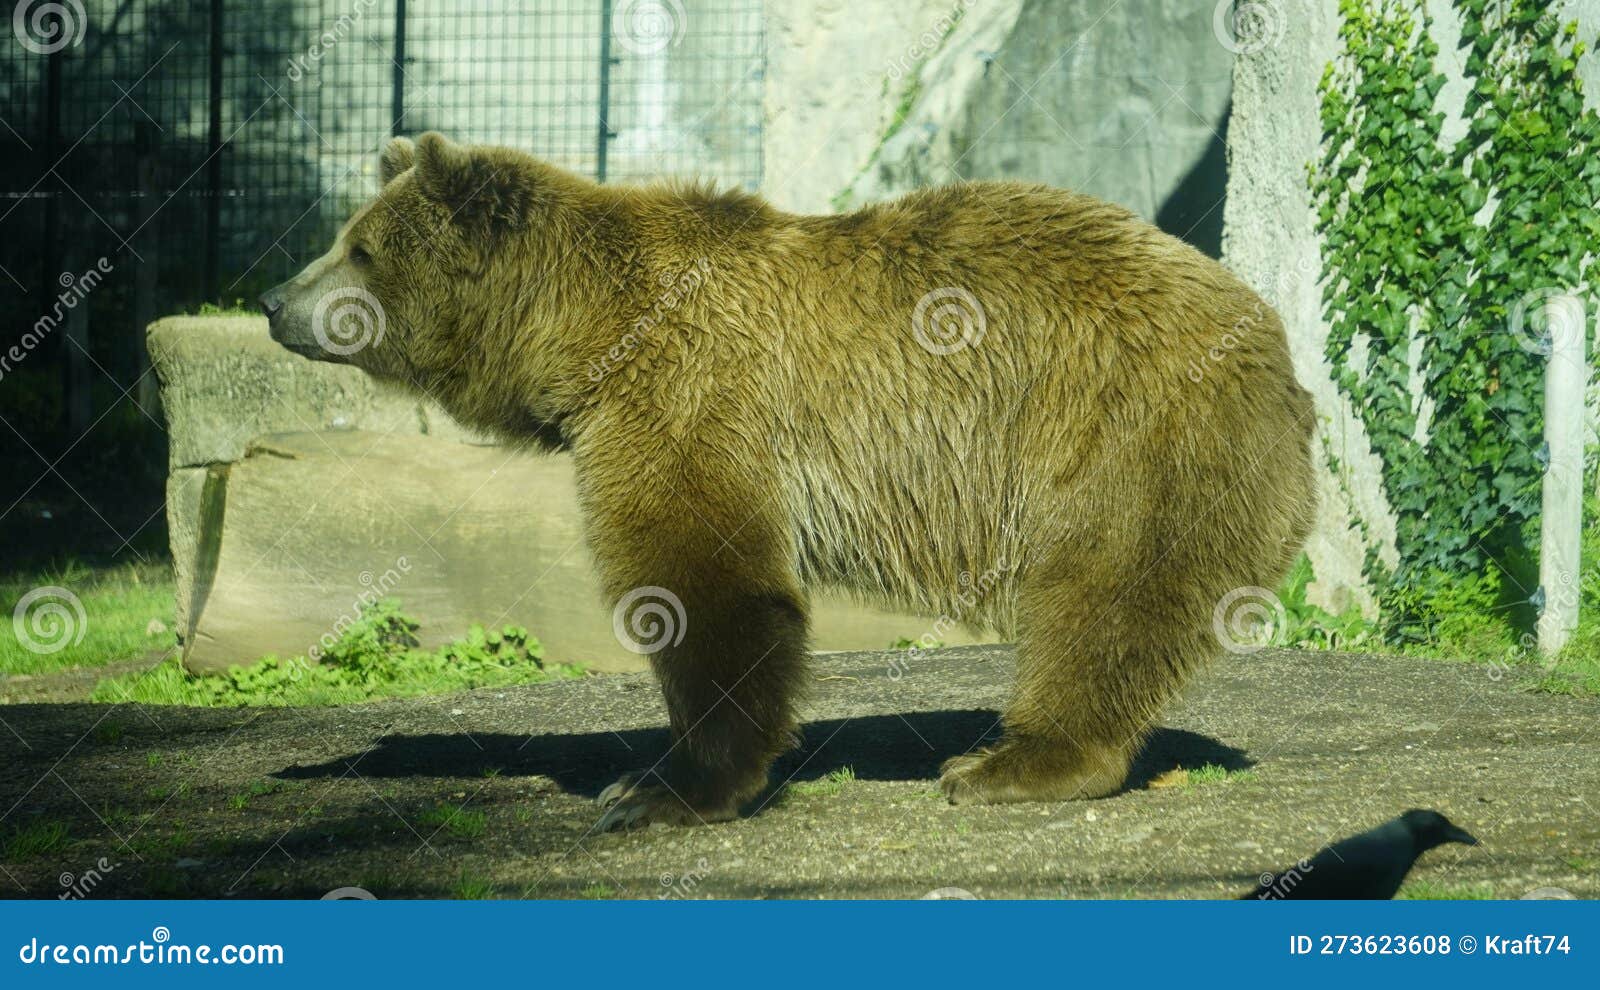 brown bear (ursus arctos) in the sun in a zoo enclosure. mammal belonging to the ursidae family